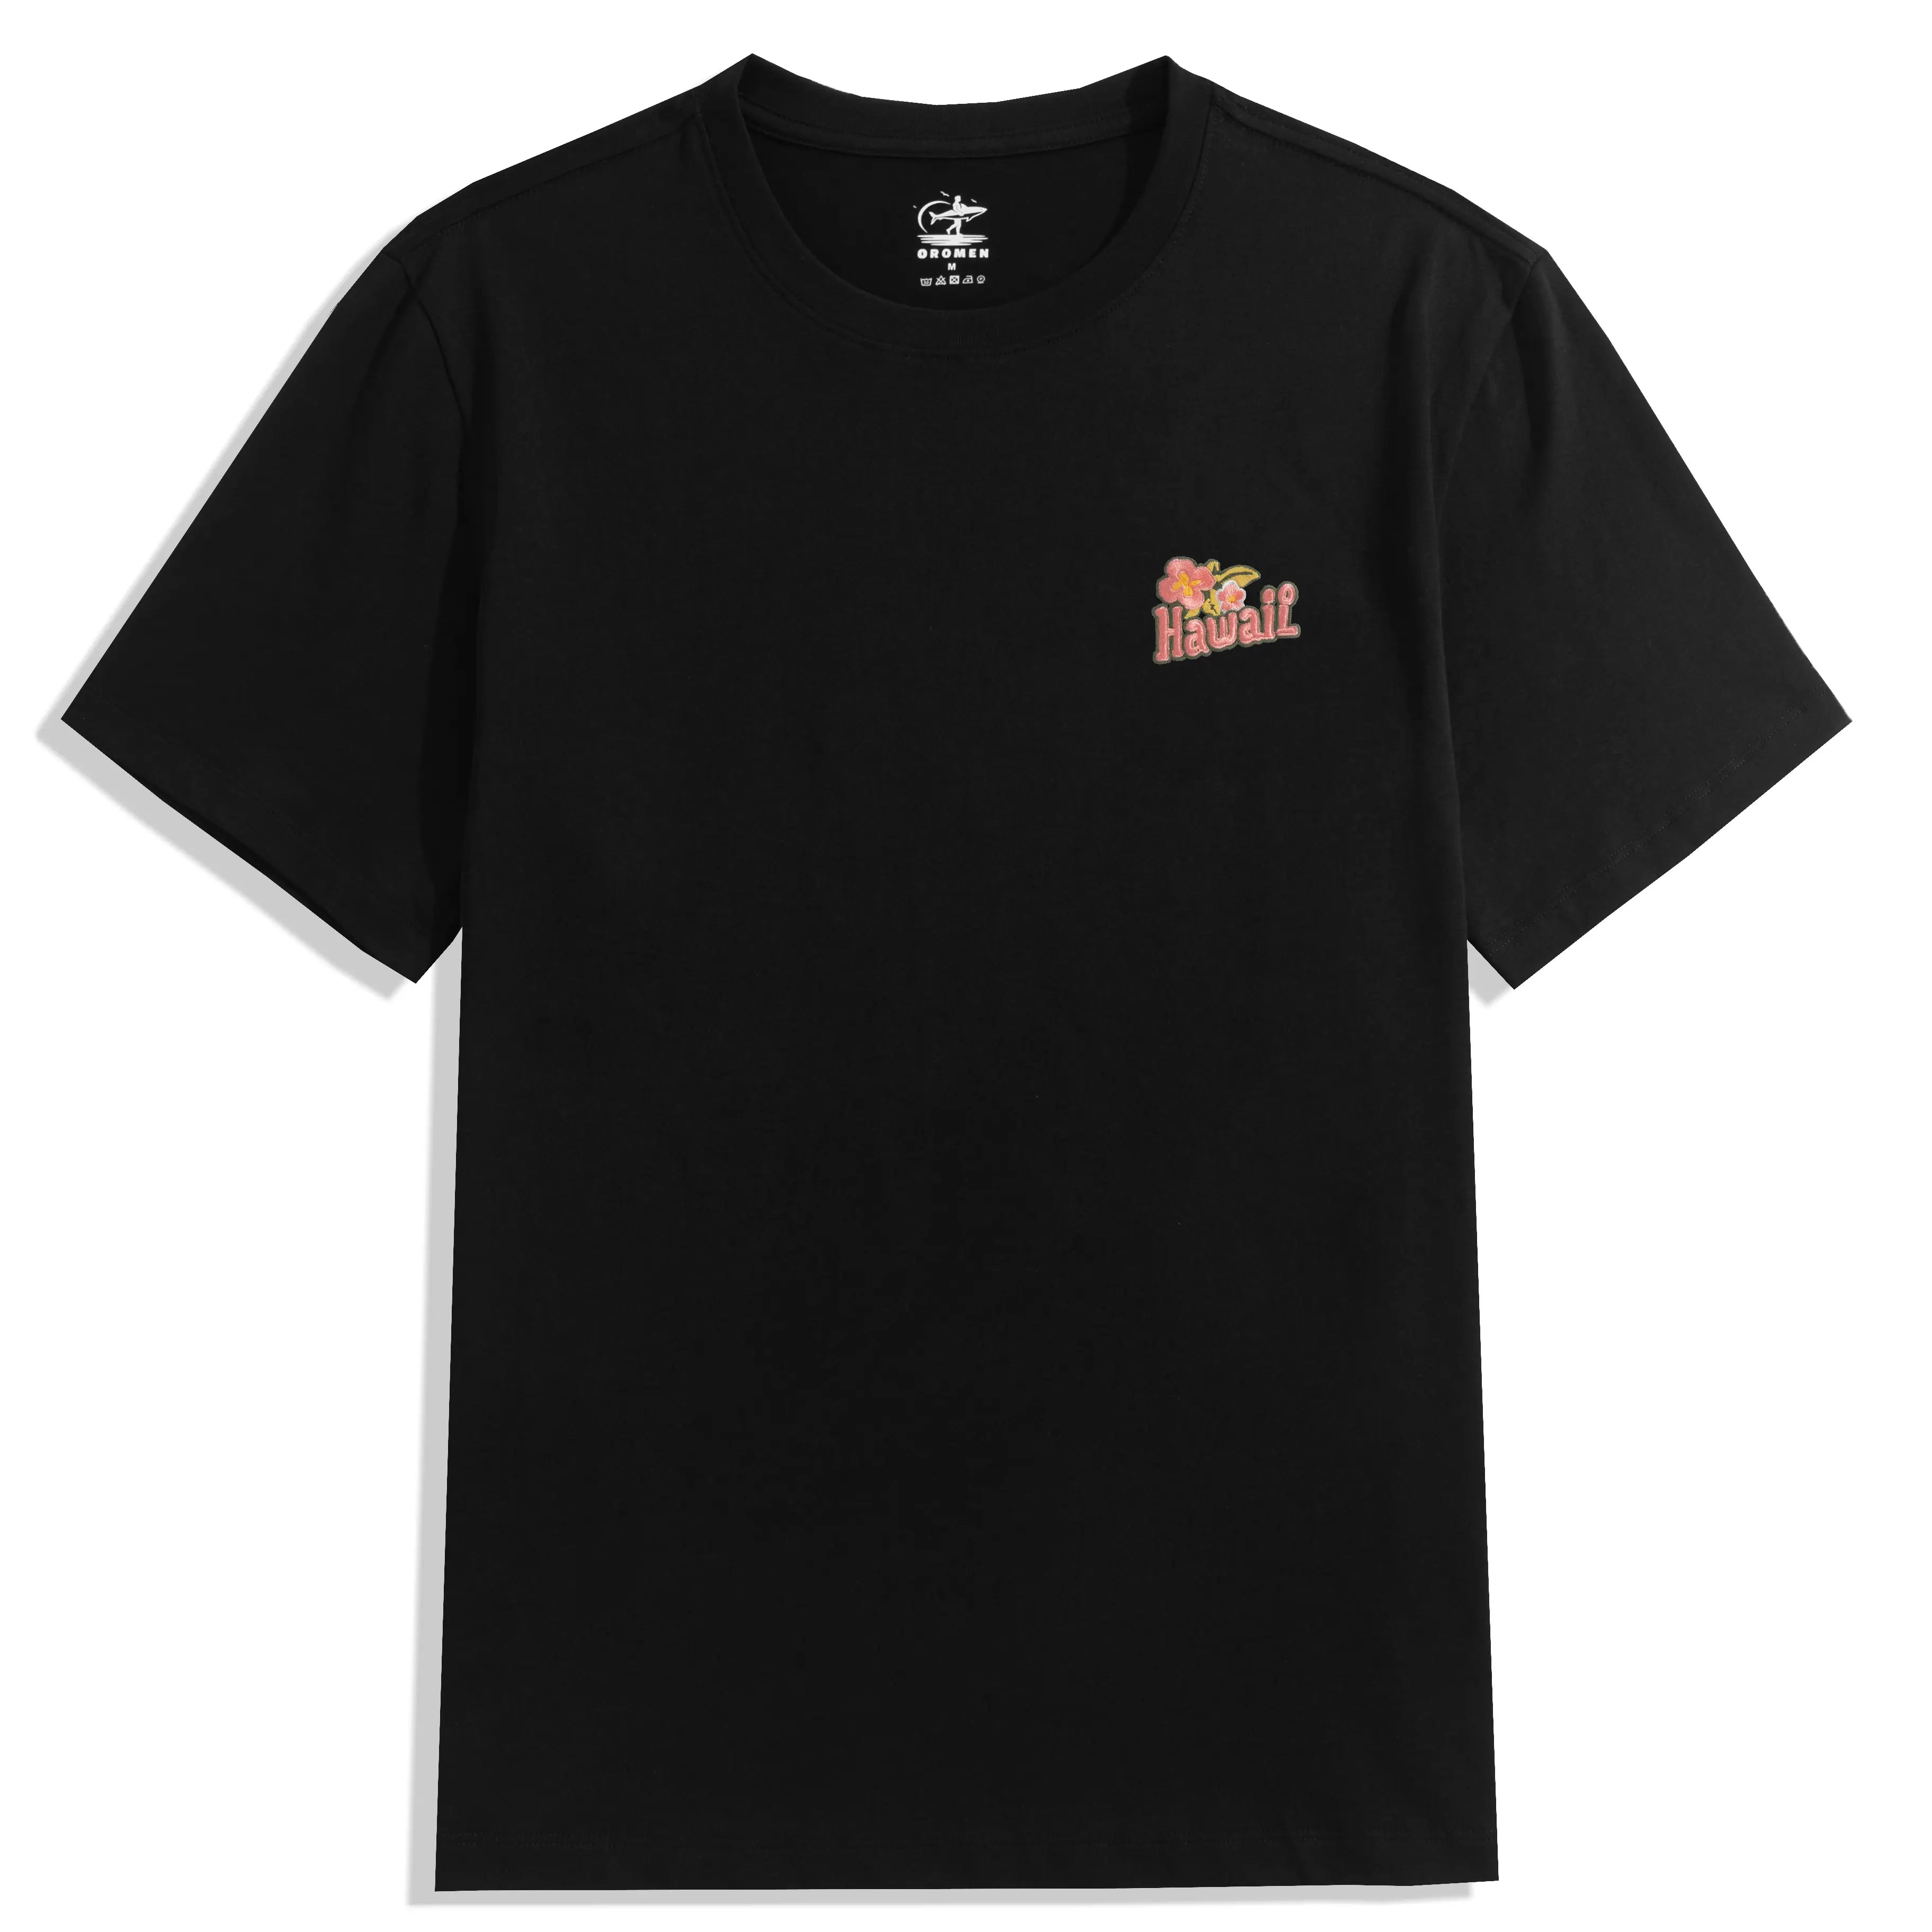 Hawaii Cotton T-shirt Black Color